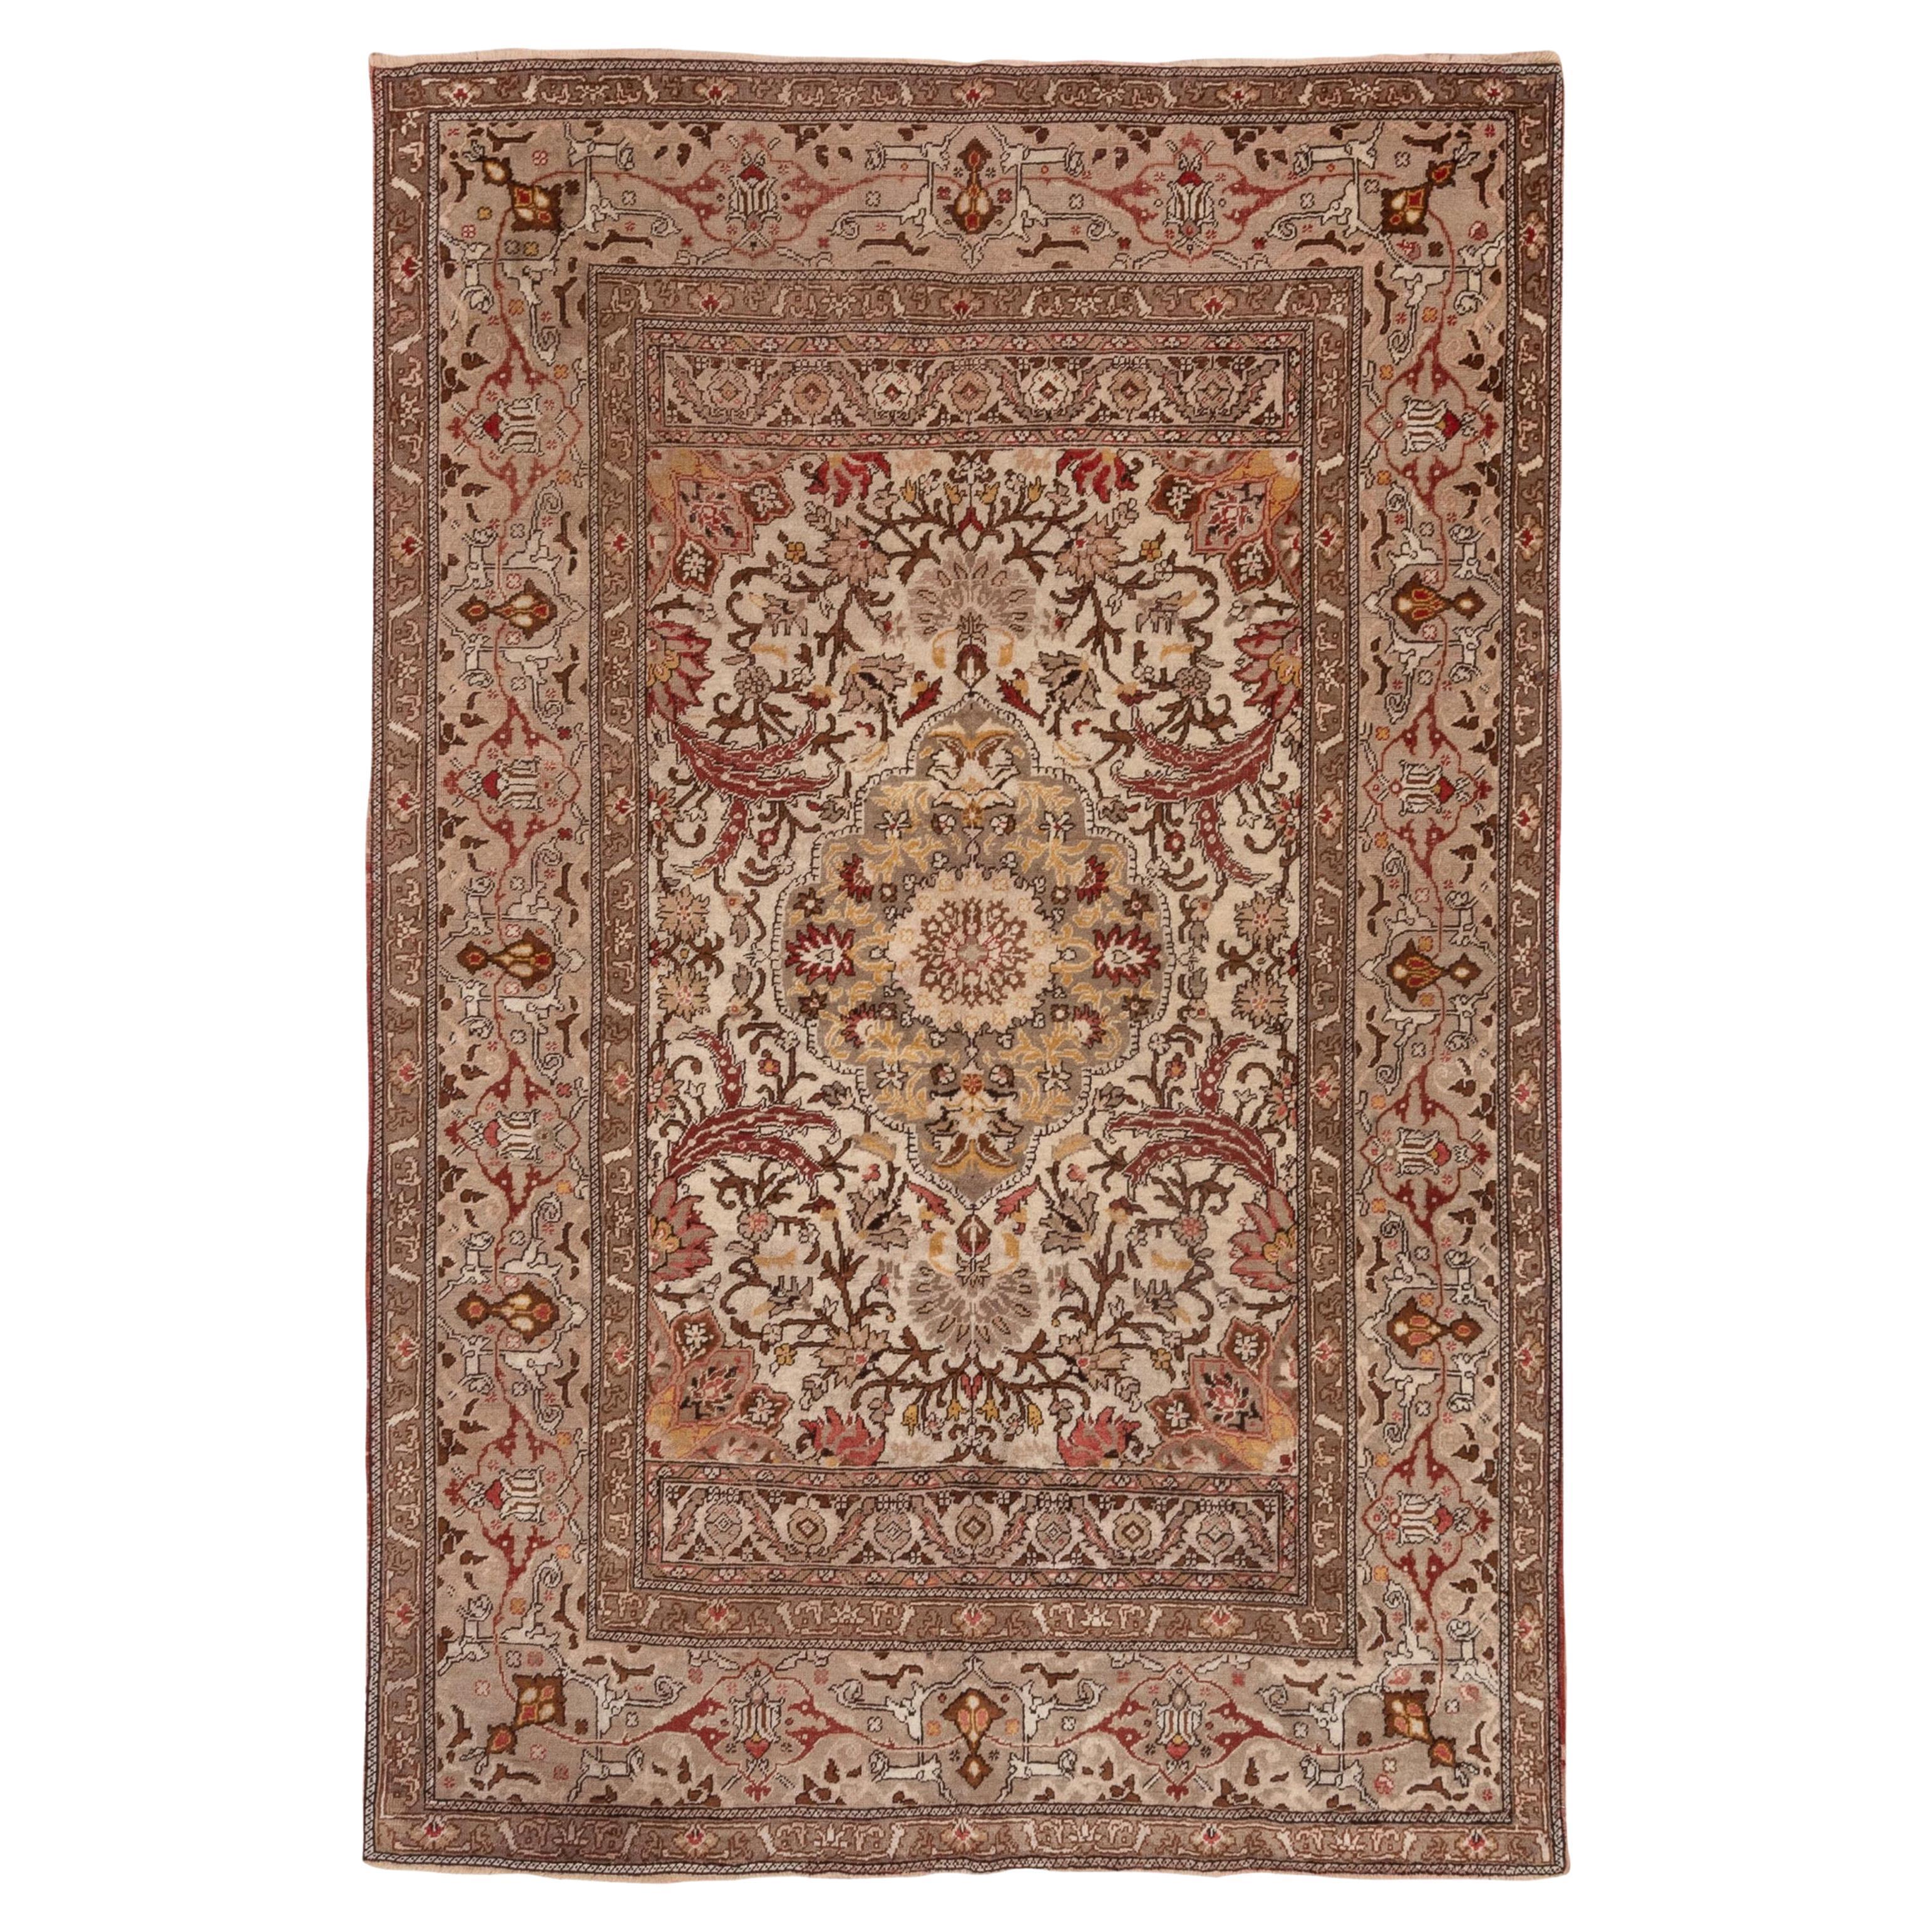 Antique Turkish Oushak Carpet, Brown Borders, Ivory Field, Medallion